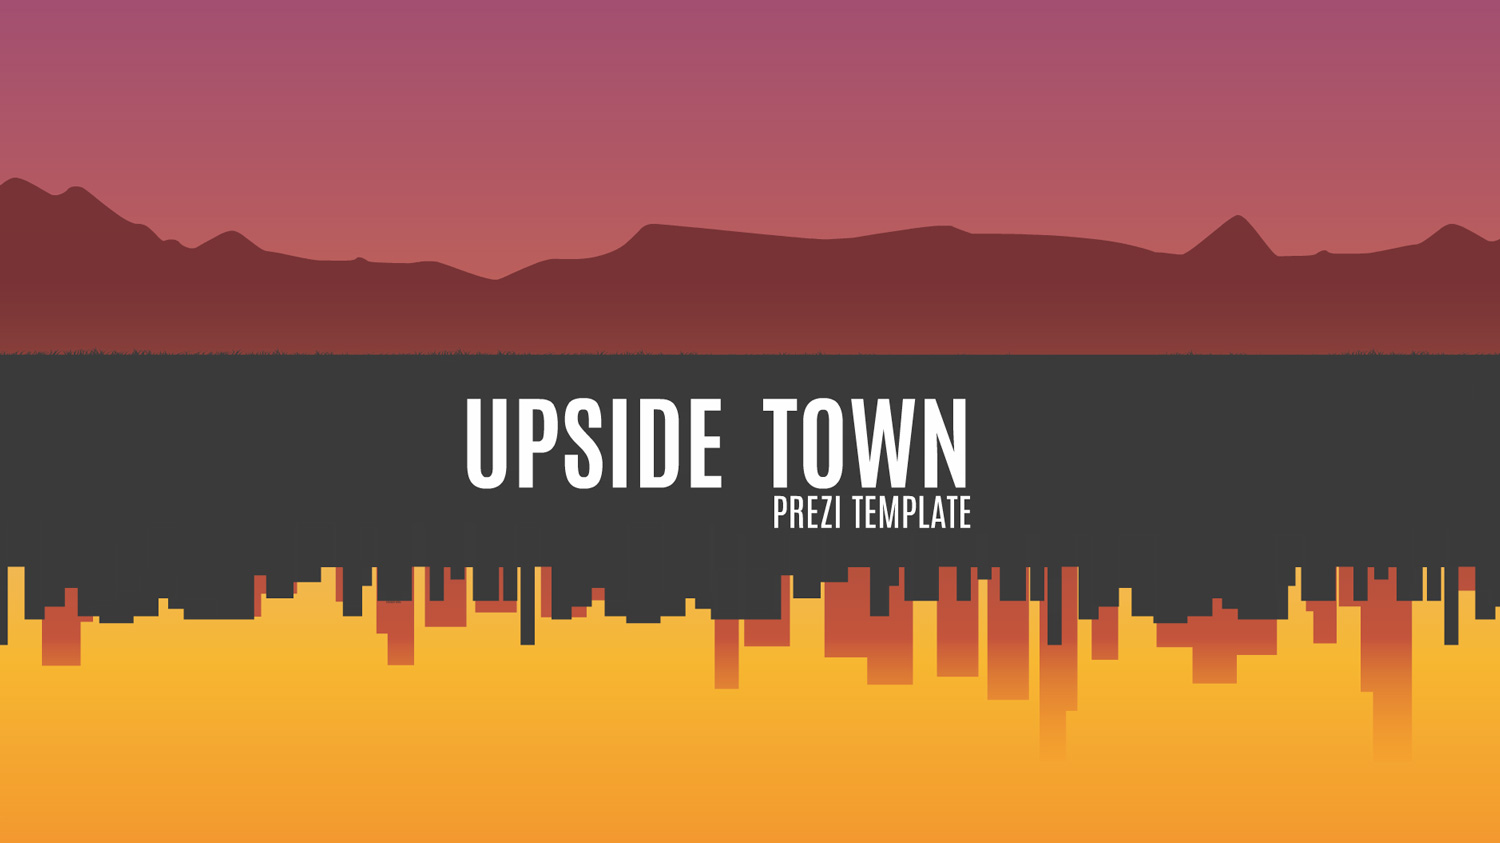 Upside town Prezi template 1500px from Prezibase